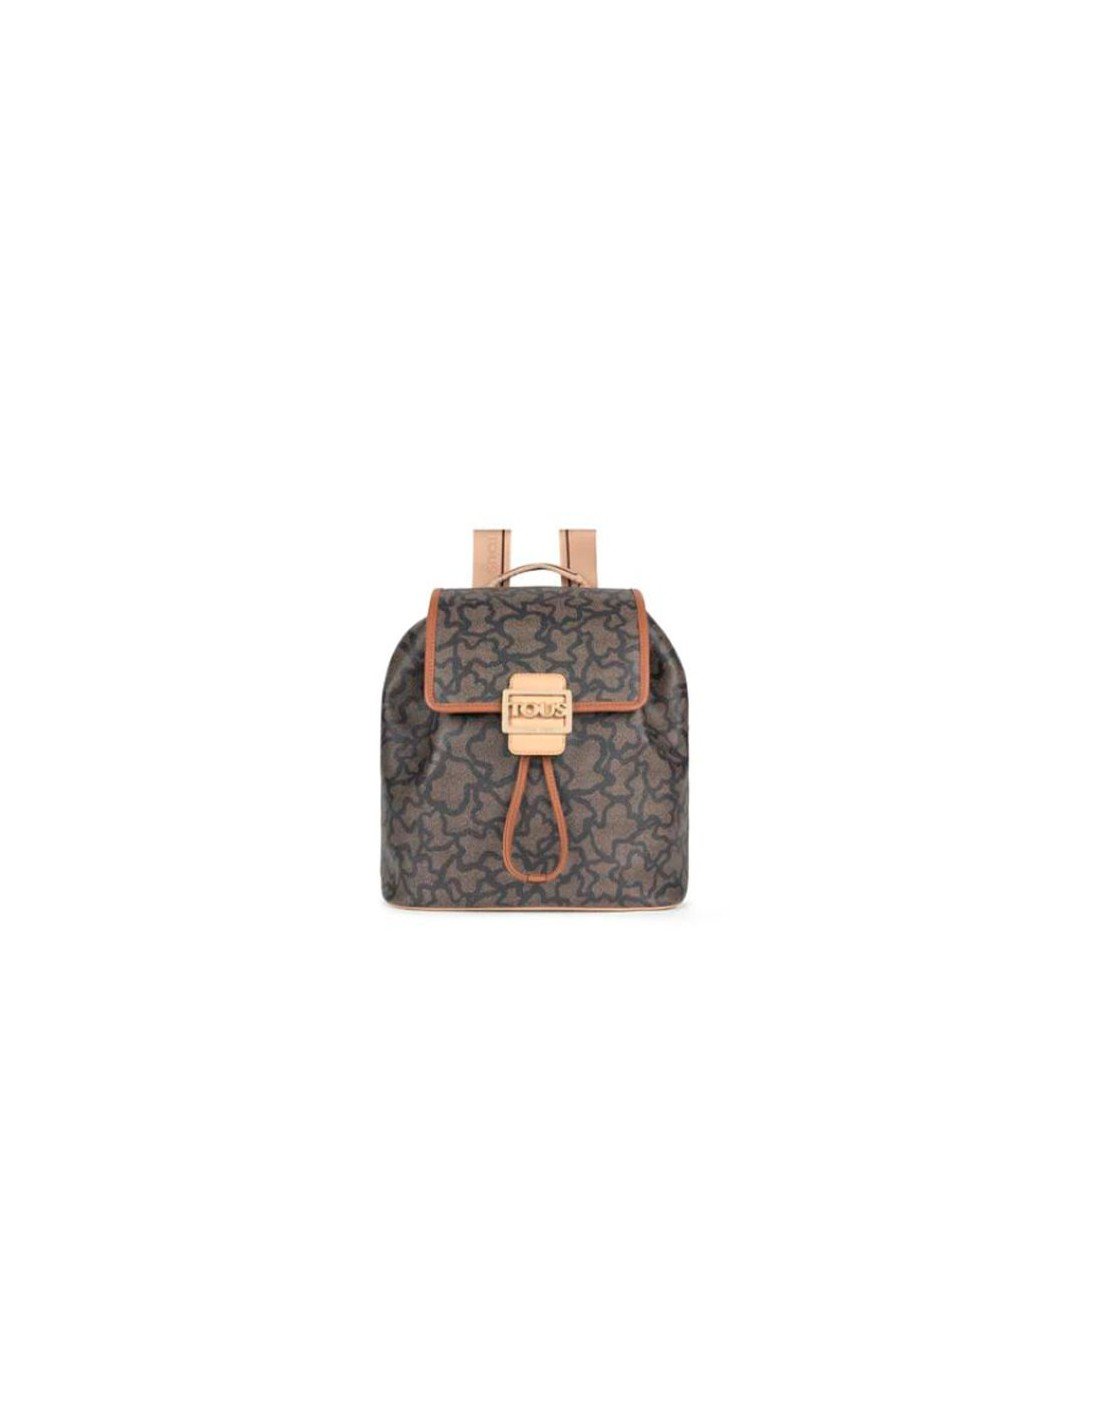 Tous Kaos Icon Multi Black Backpack, latest offers on Tous Moda fashion  accessories